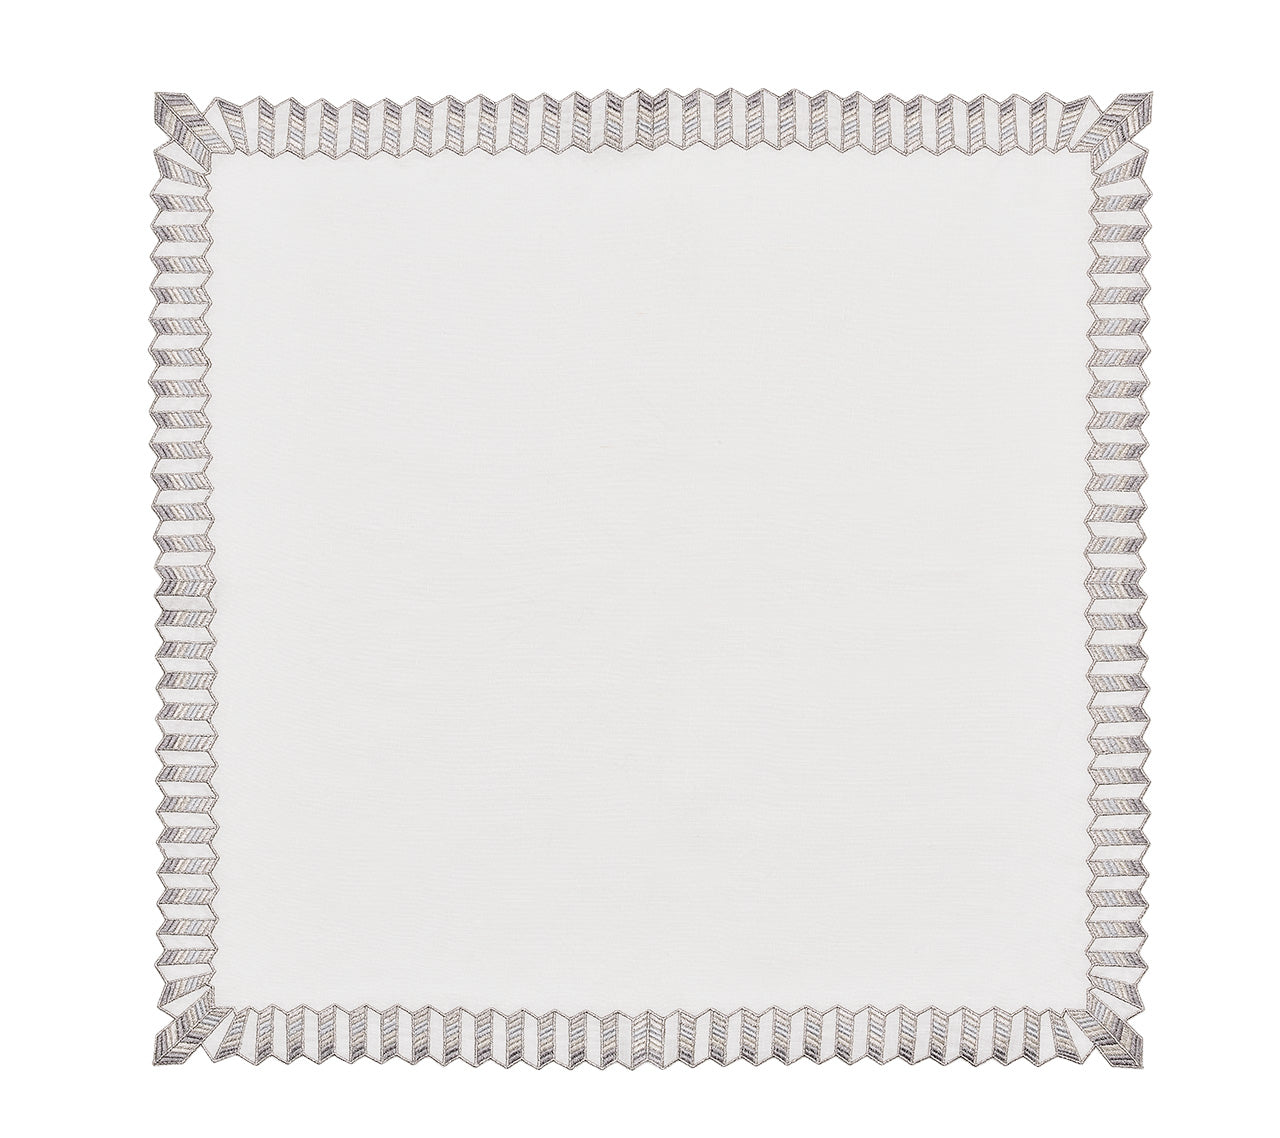 Etoile Napkin in White & Silver, Set of 4 in a Gift Box